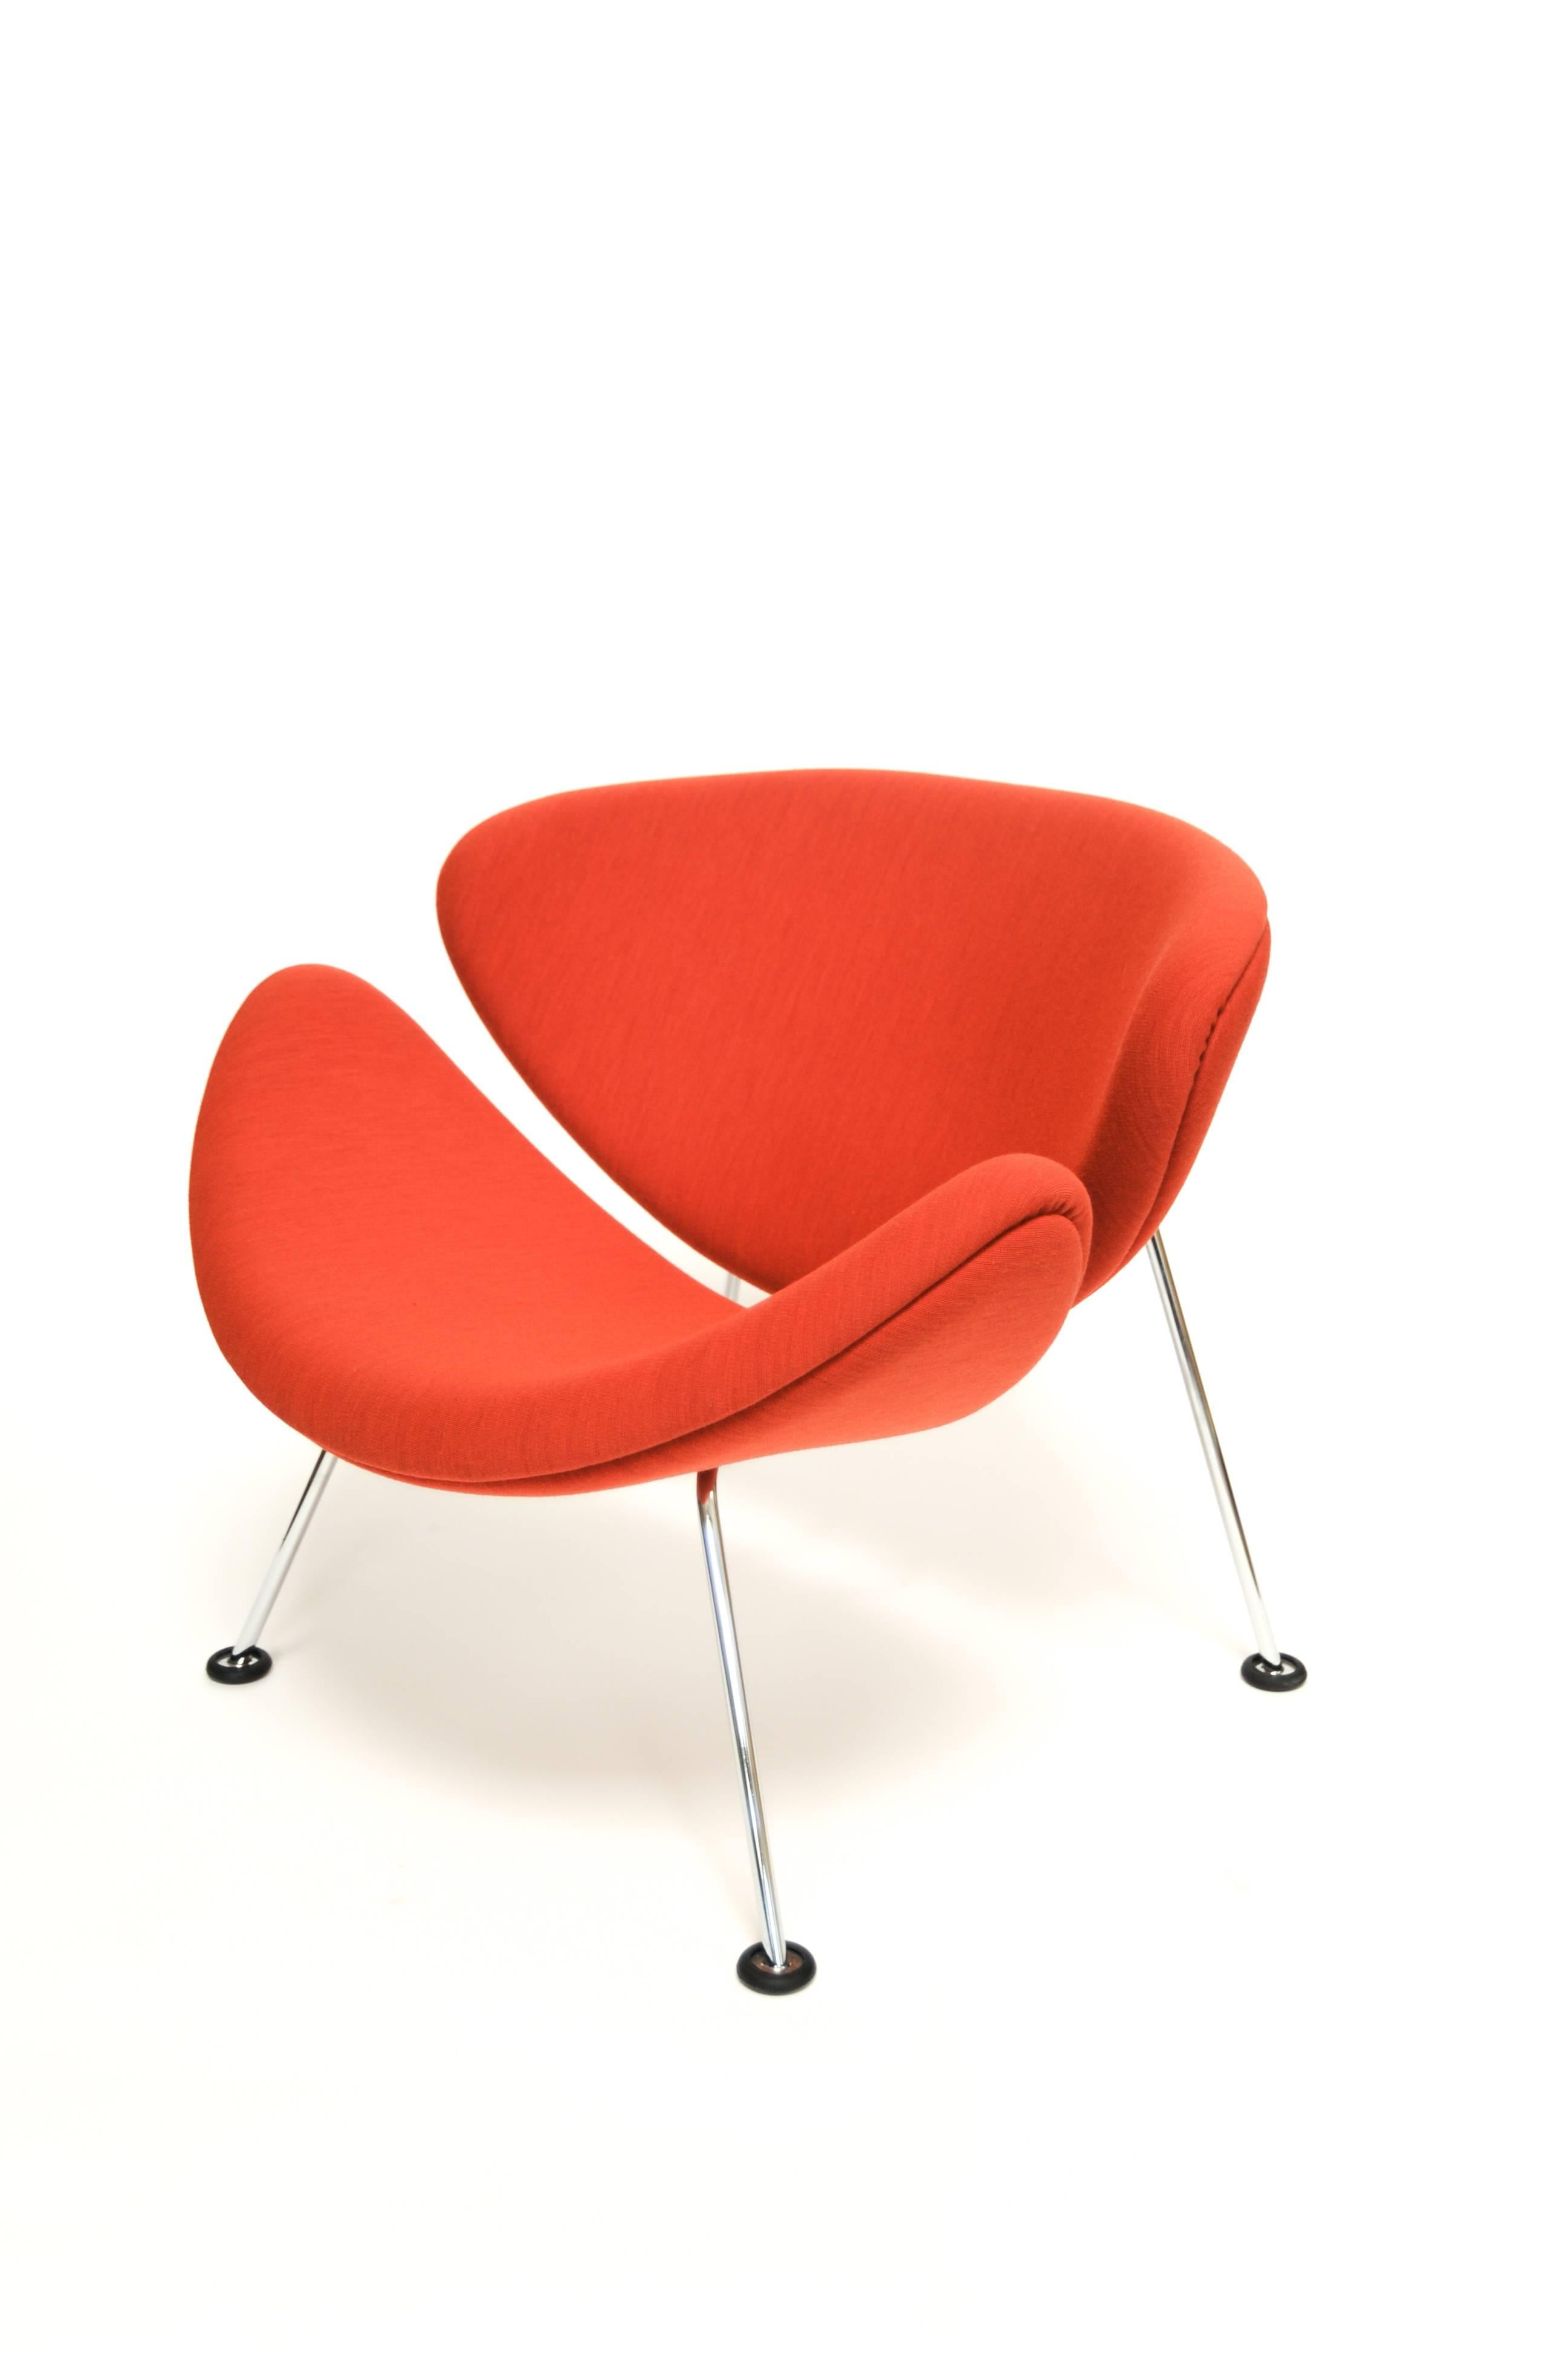 Orange slice Jr chair by Pierre Paulin in Kvadrat 'Divina Melange2', Netherlands.

Produced by Artifort, Netherlands, 2017
Measures: H 21.25 in, W 24.5 in, D 24.5 in (seat H 12.25 in)
Fabric: Kvadrat 'Divina Melange2'

Chair as shown: Febrik